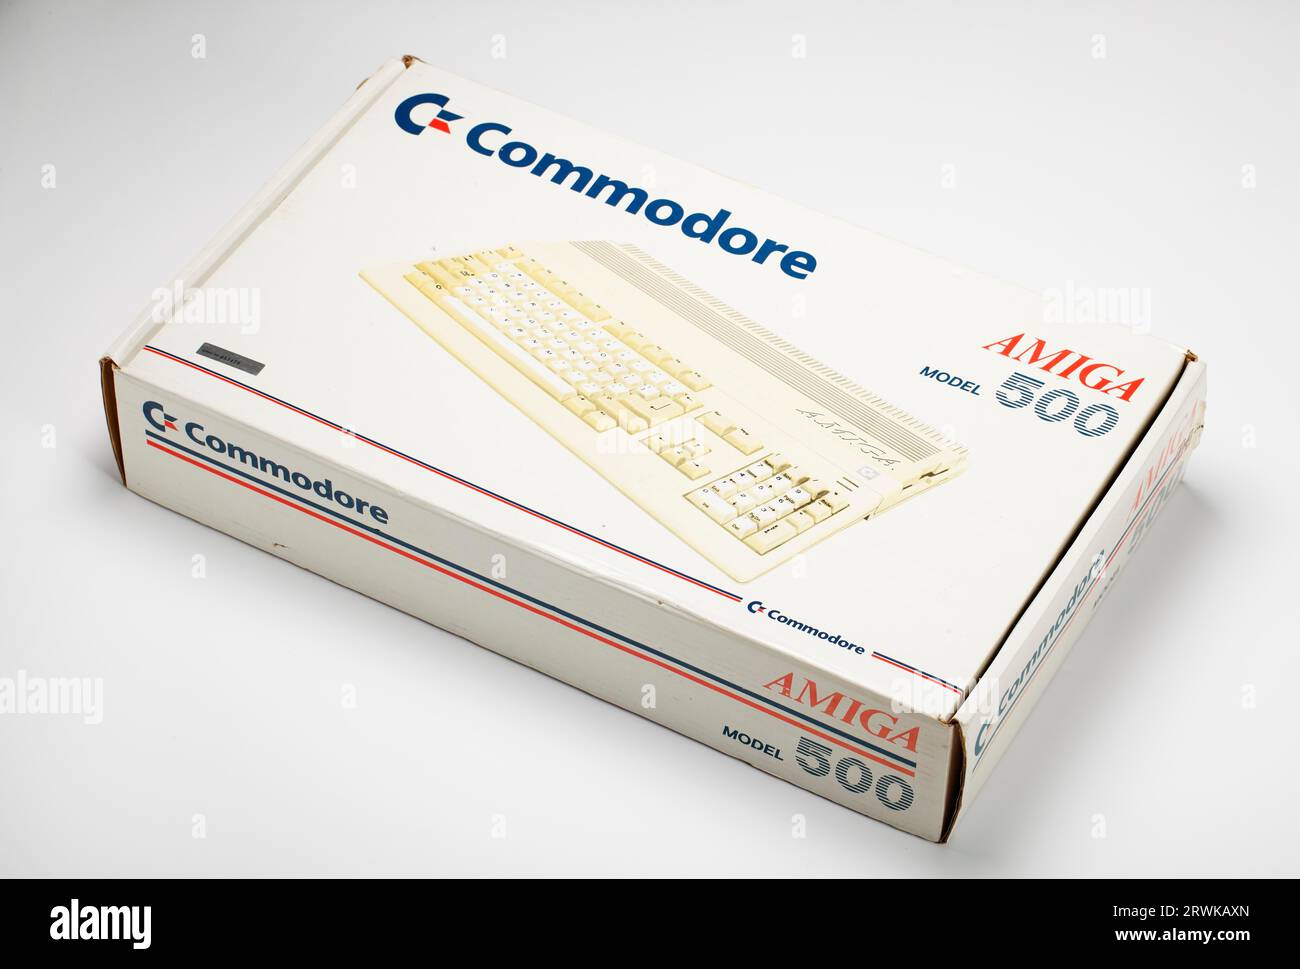 Box of Commodore Amiga computer from the 1980s Stock Photo